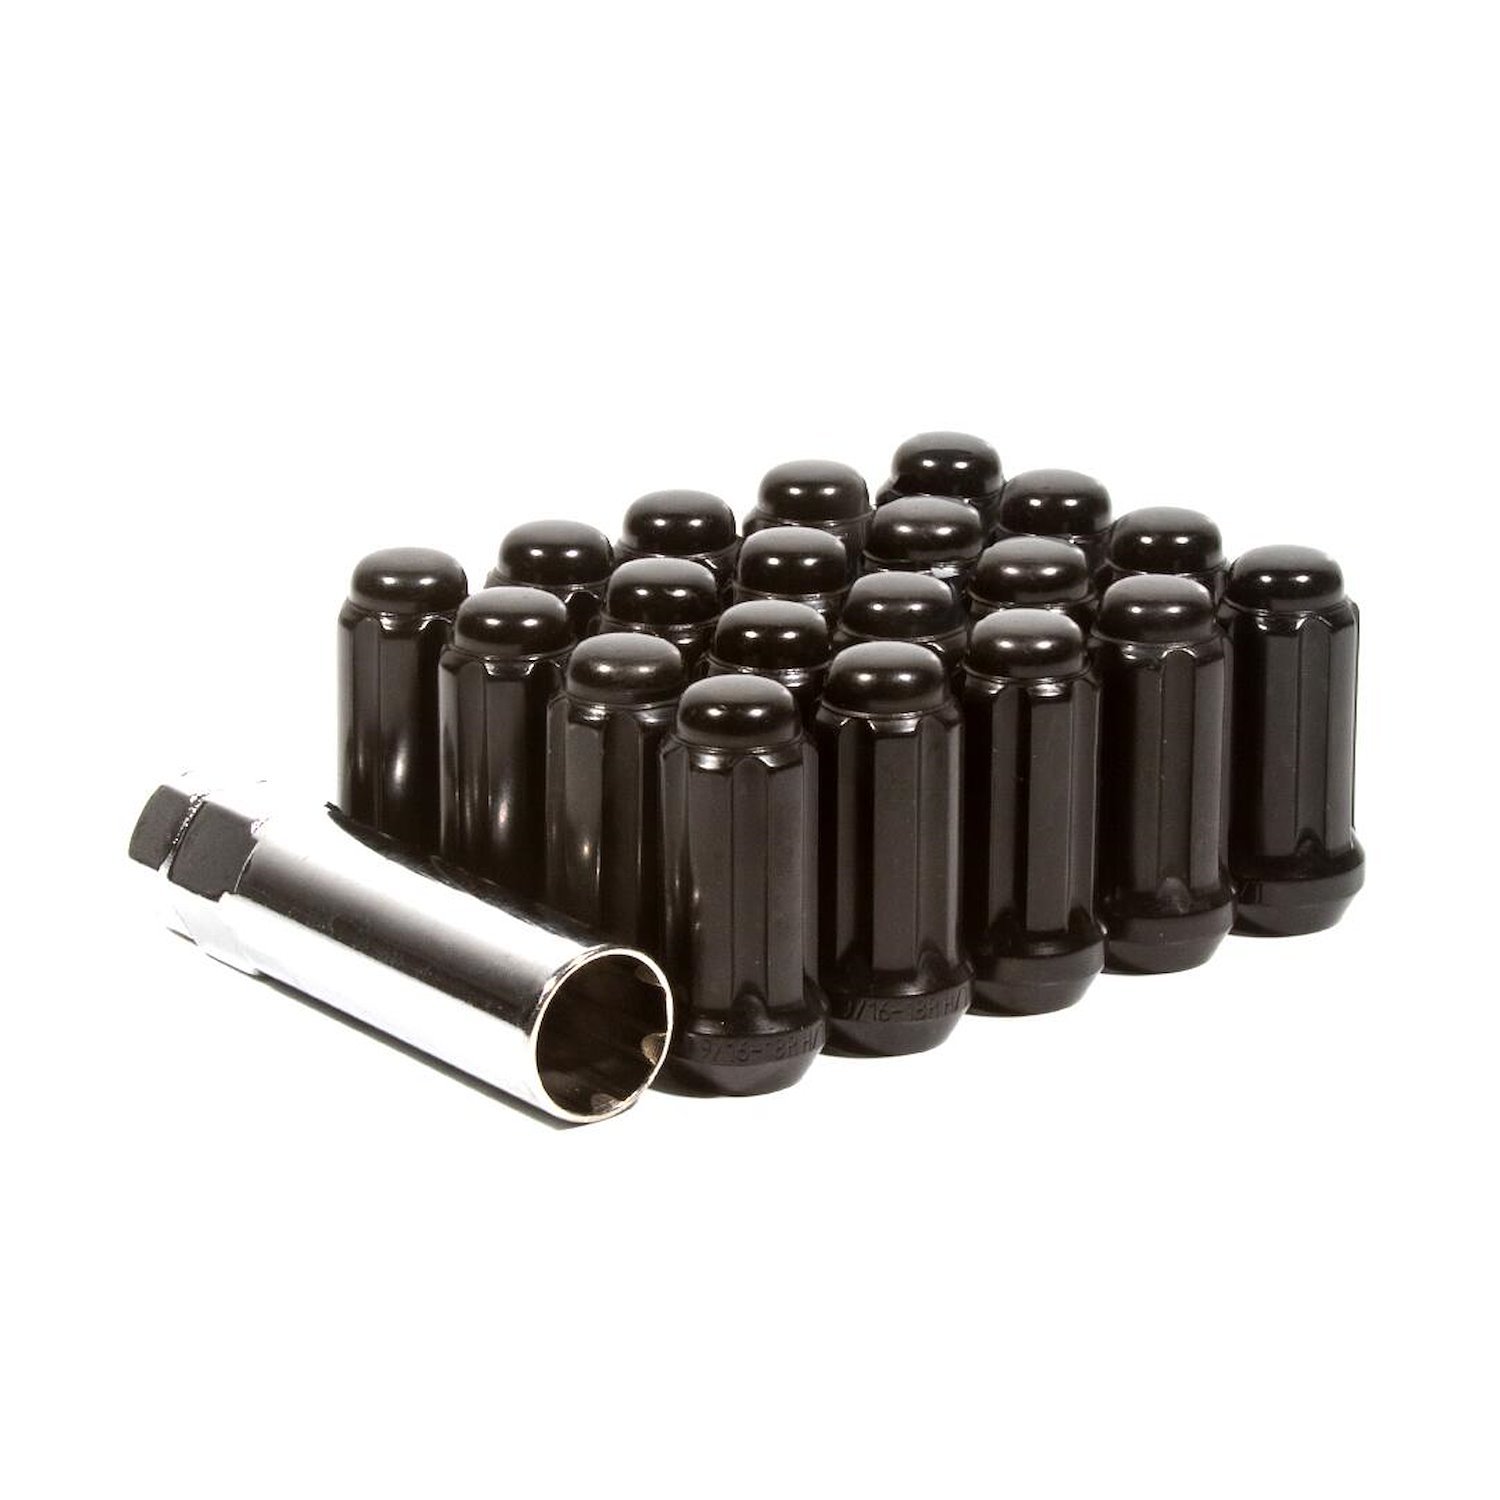 LK-W5814STB Lug Kit, Spline, M14X1.5, 8 Lug Kit, Black, 32 Nuts